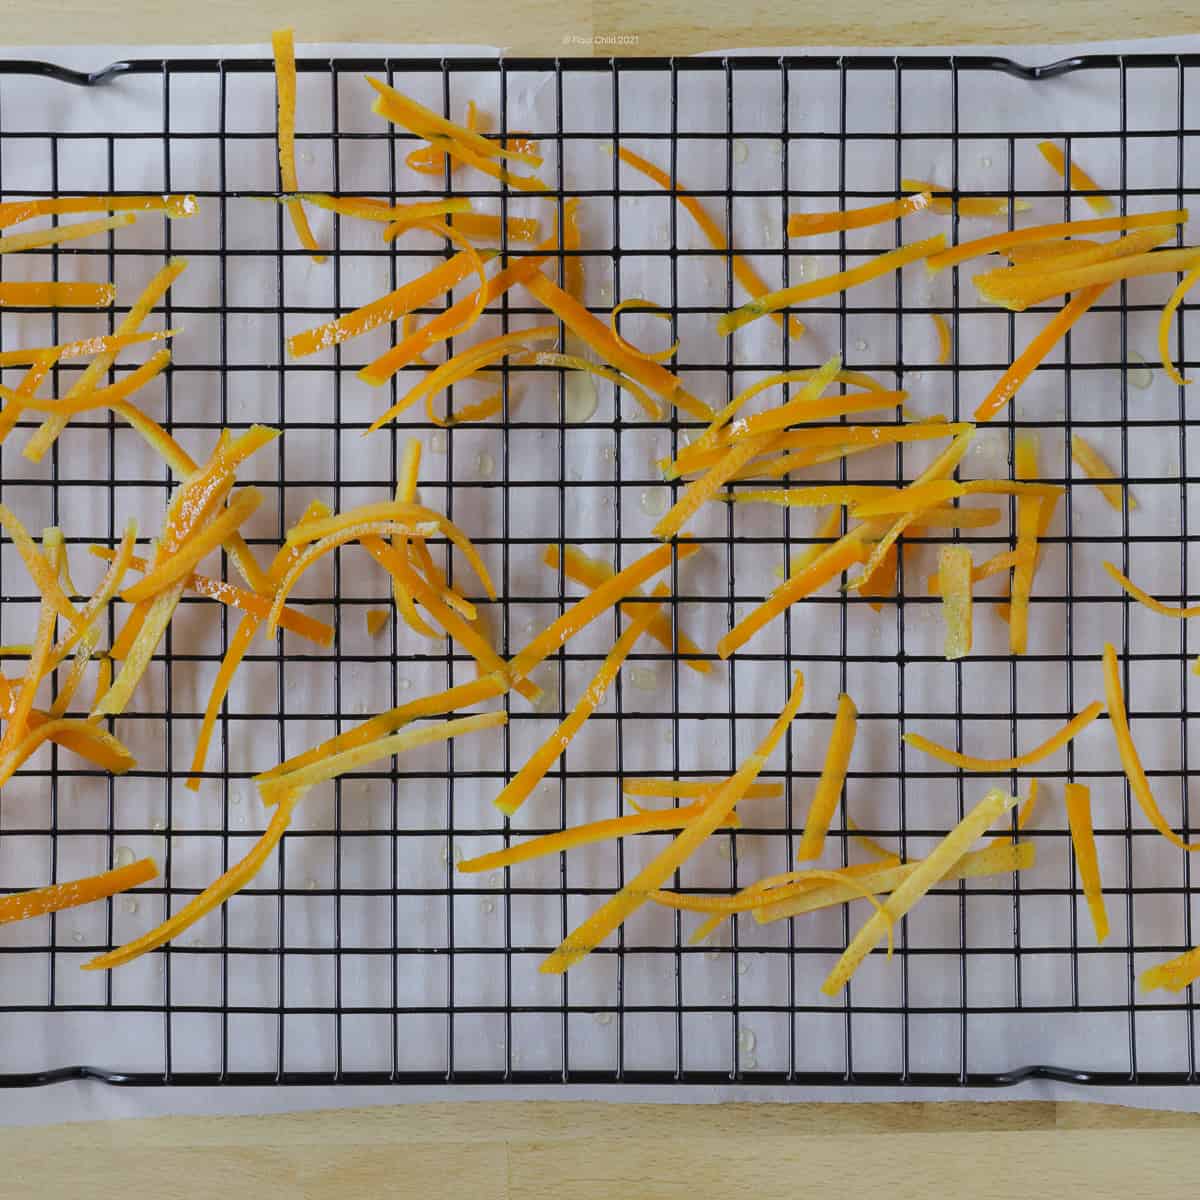 Orange peel drying on a cookie sheet